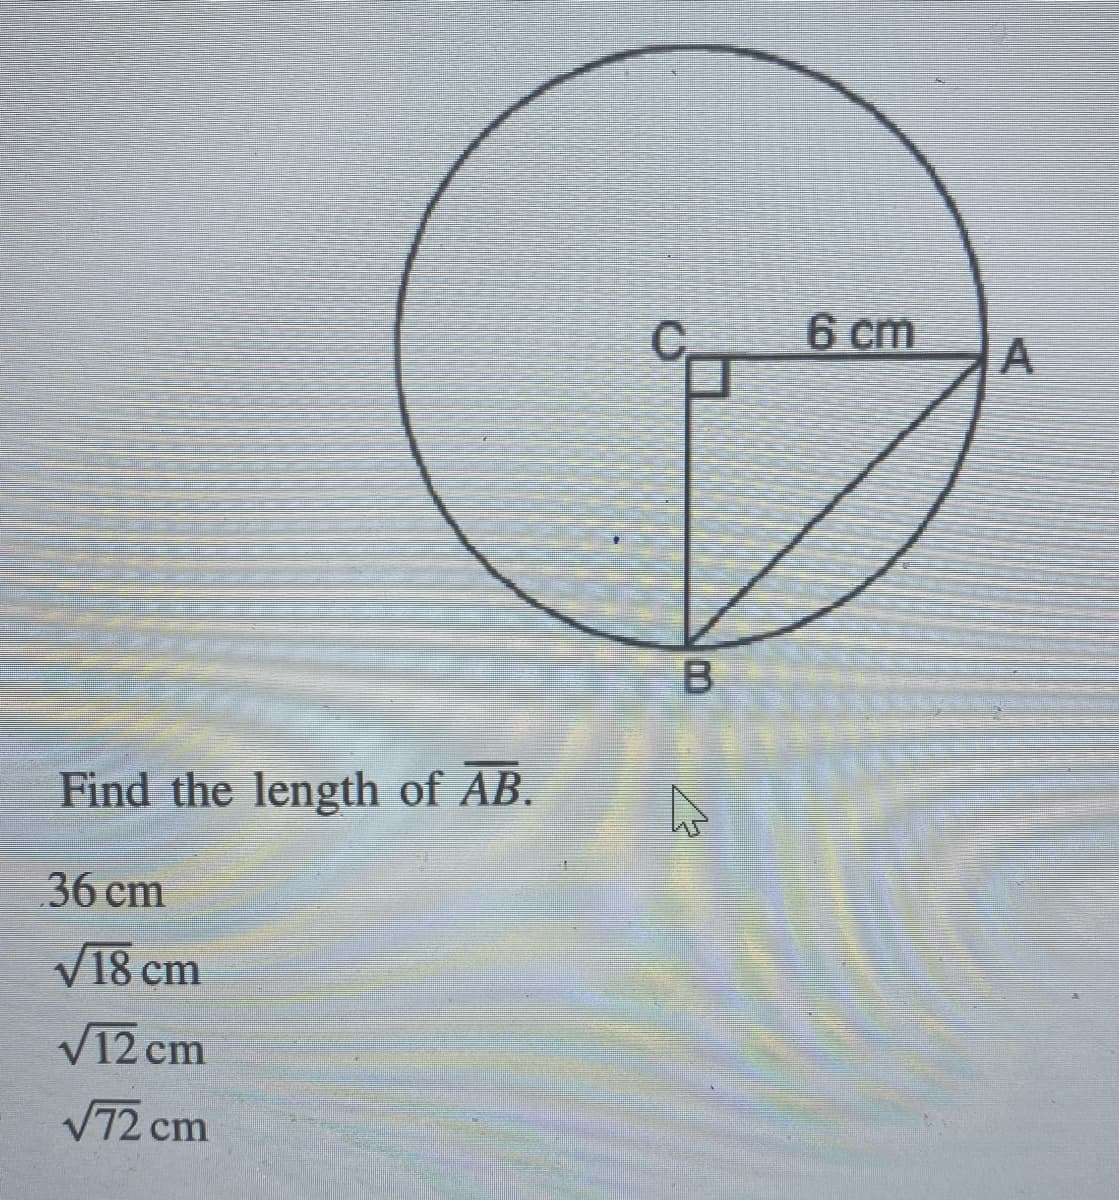 Find the length of AB.
36 cm
√18 cm
√12 cm
√72 cm
B
6 cm
A